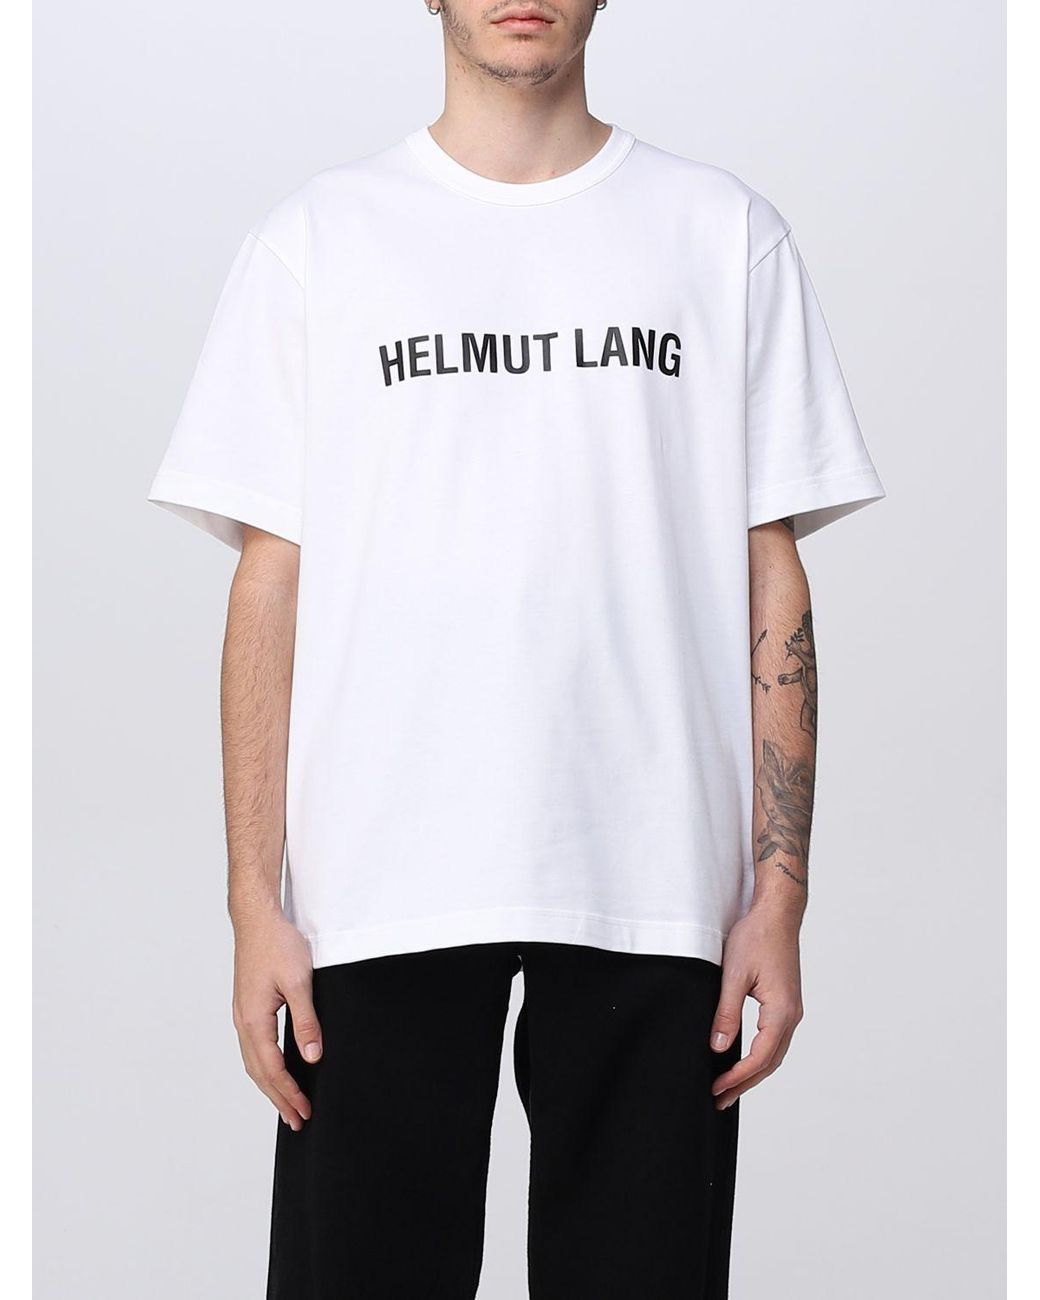 Uendelighed supplere fiber Helmut Lang T-shirt in Weiß für Herren | Lyst DE